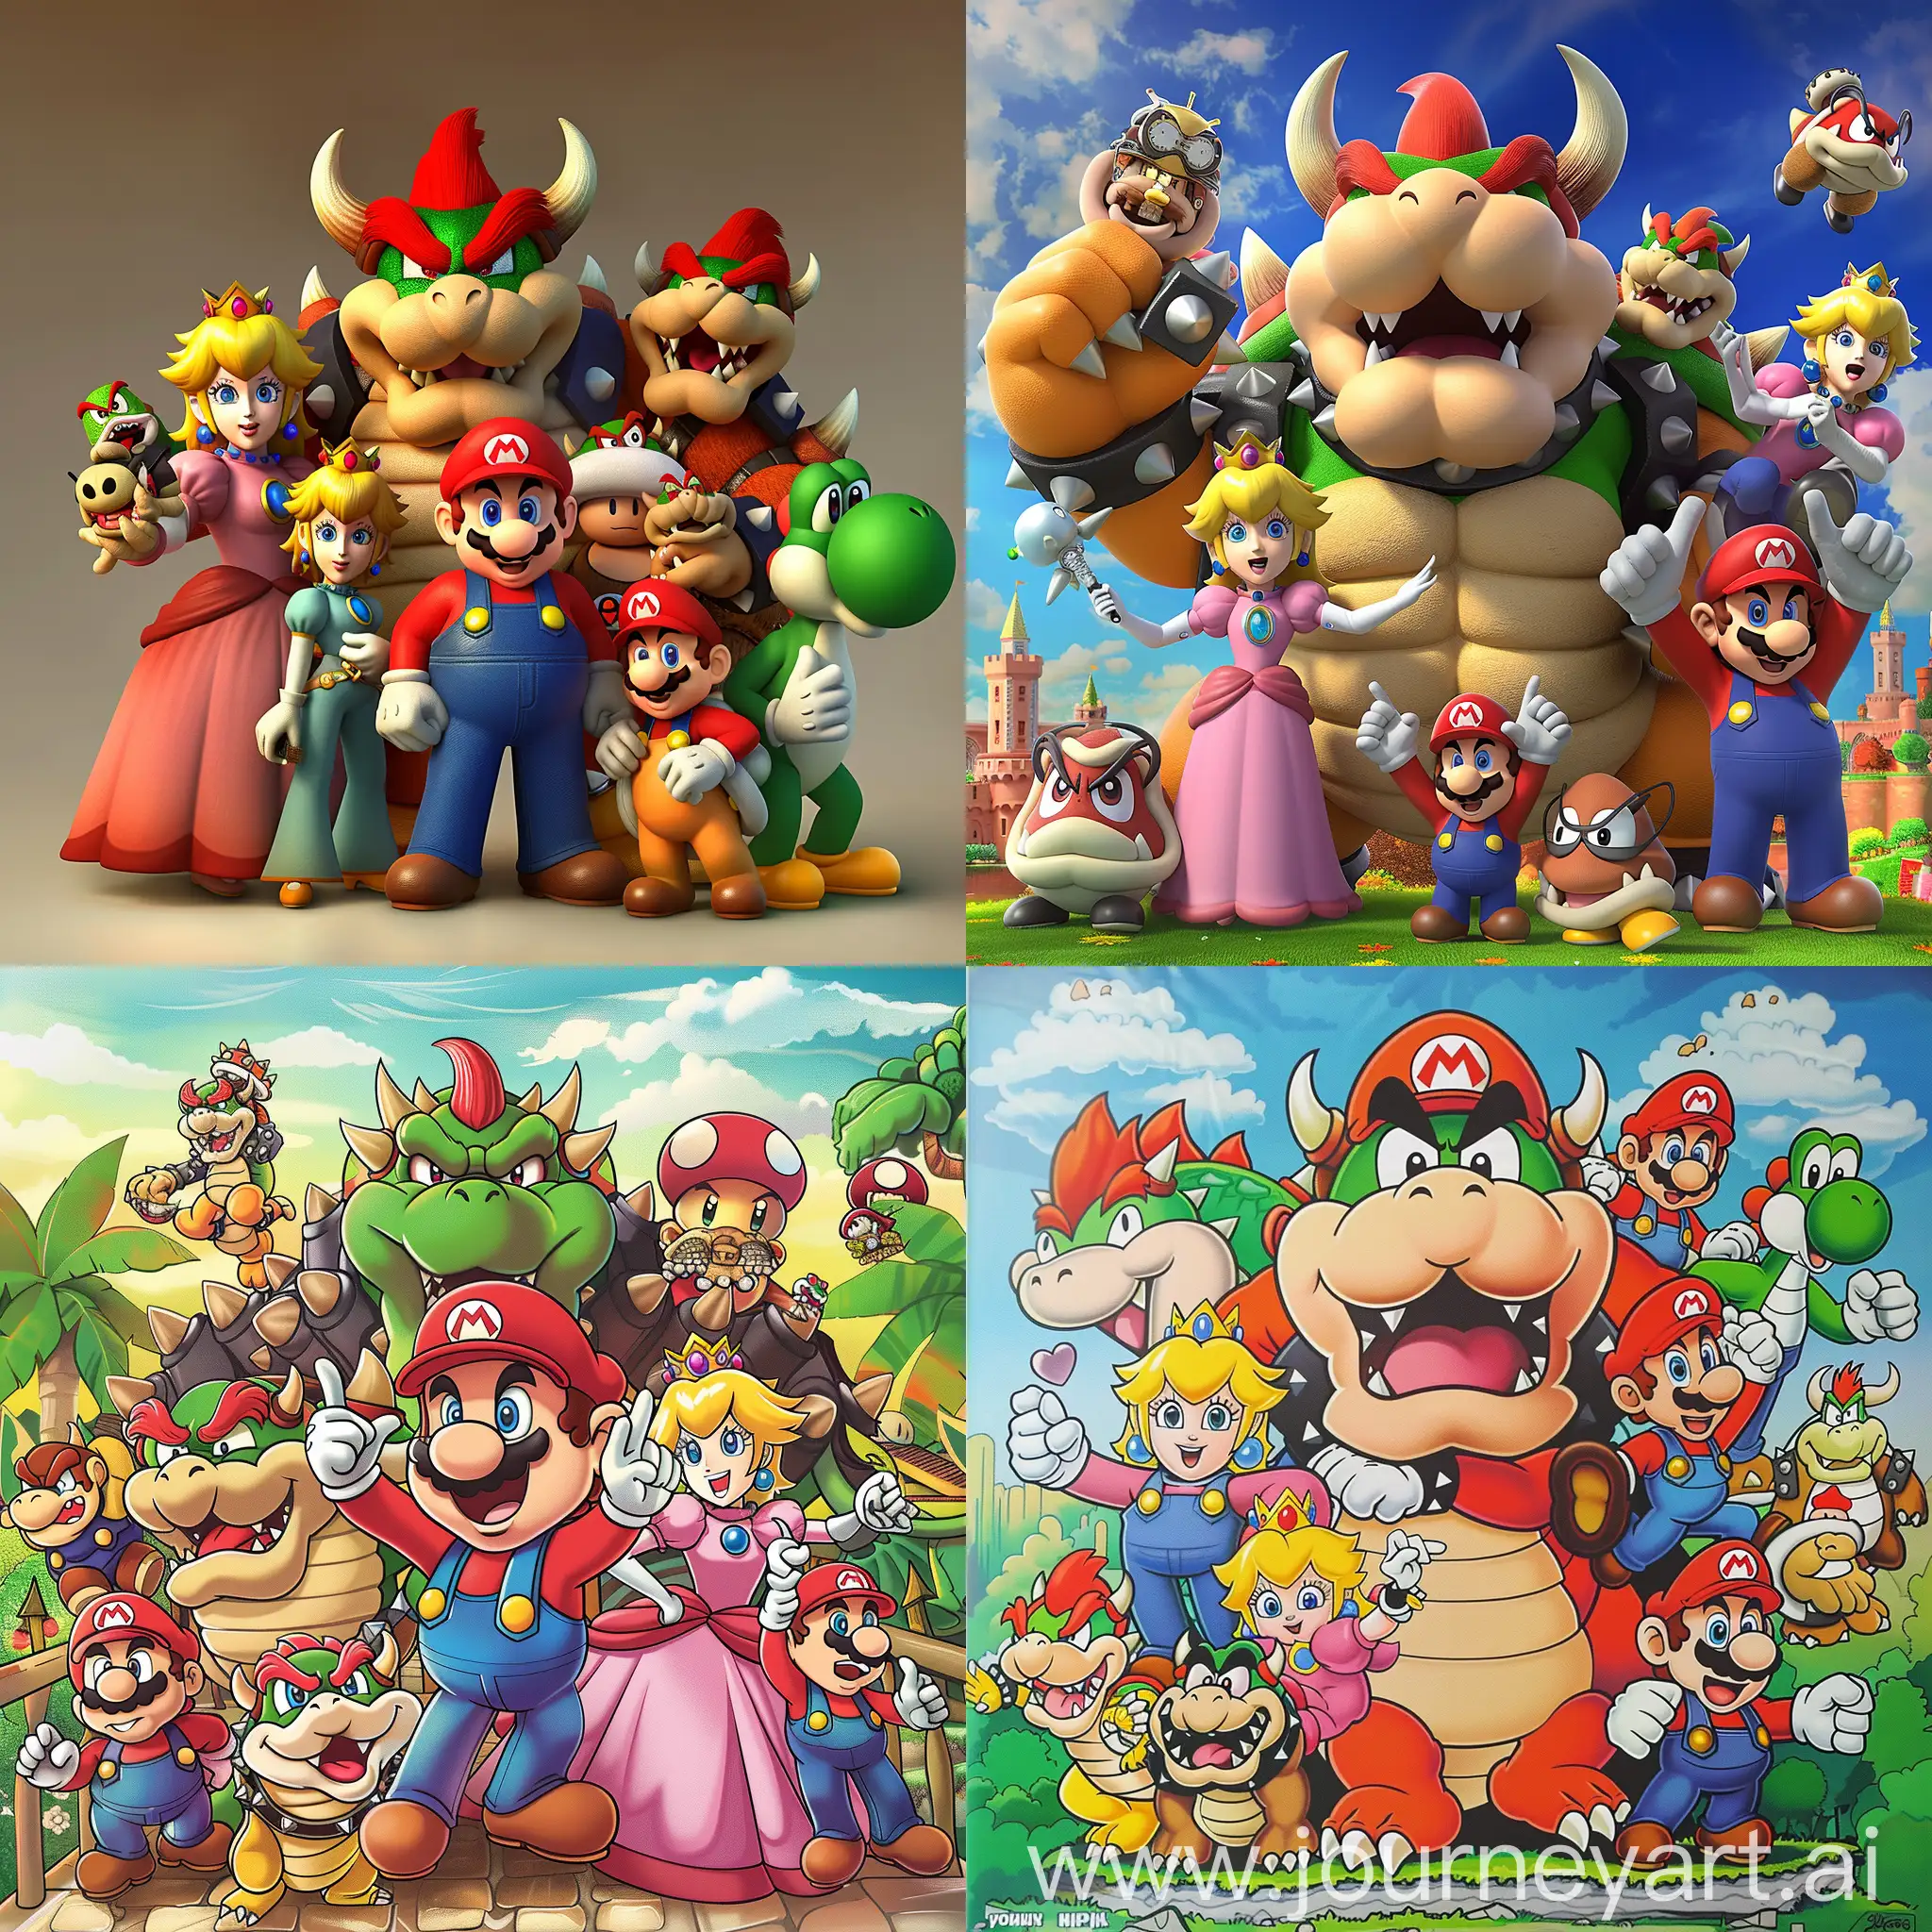 mario bros, luiggi, princess peach, bowser, toad, hammer bro, dobkey kong, bowser jr. yoshi together and happy full color background